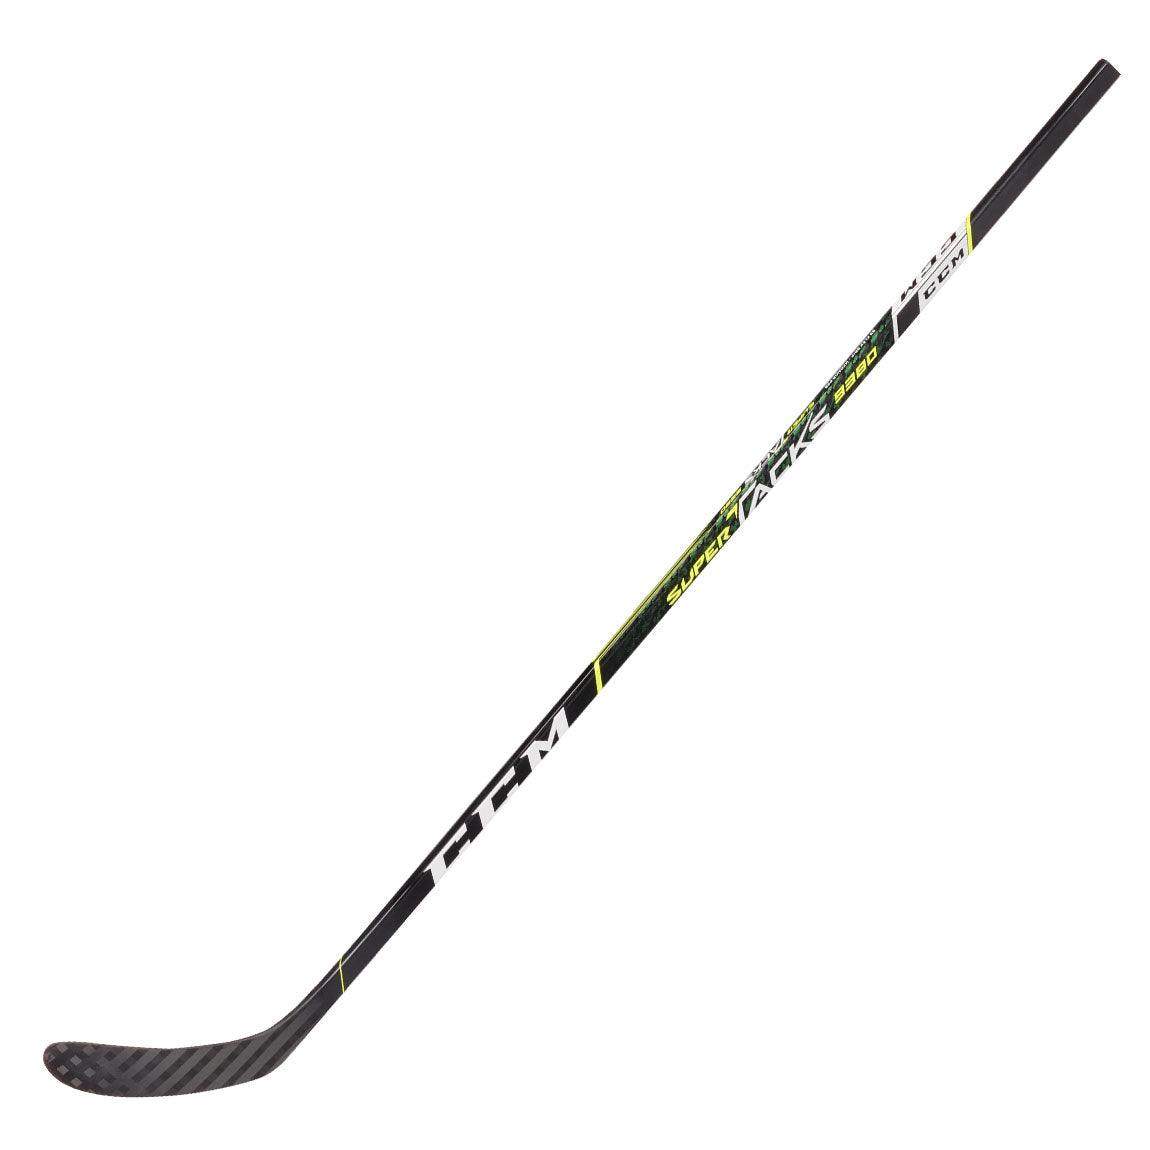 Super Tacks 9380 Hockey Stick - Senior - Sports Excellence